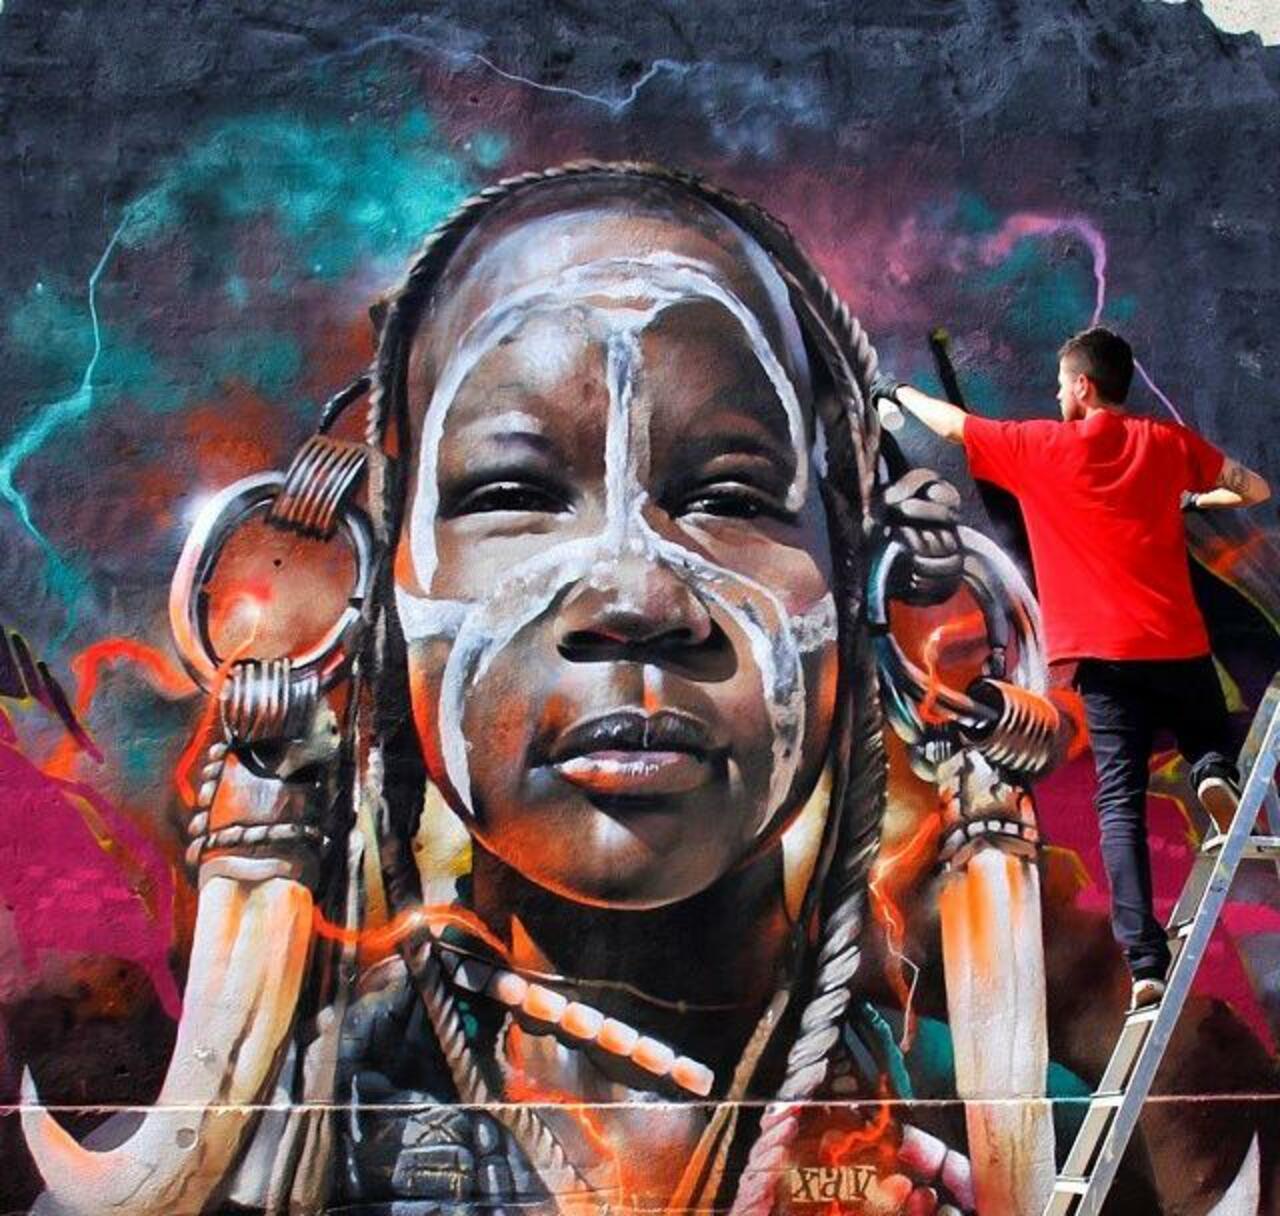 “@DaddyFunk_DF: Latest Street Art by the talented - XAV  

#art #arte #graffiti #streetart http://t.co/x2QkSI3ZlC" This is Very #Beautiful”